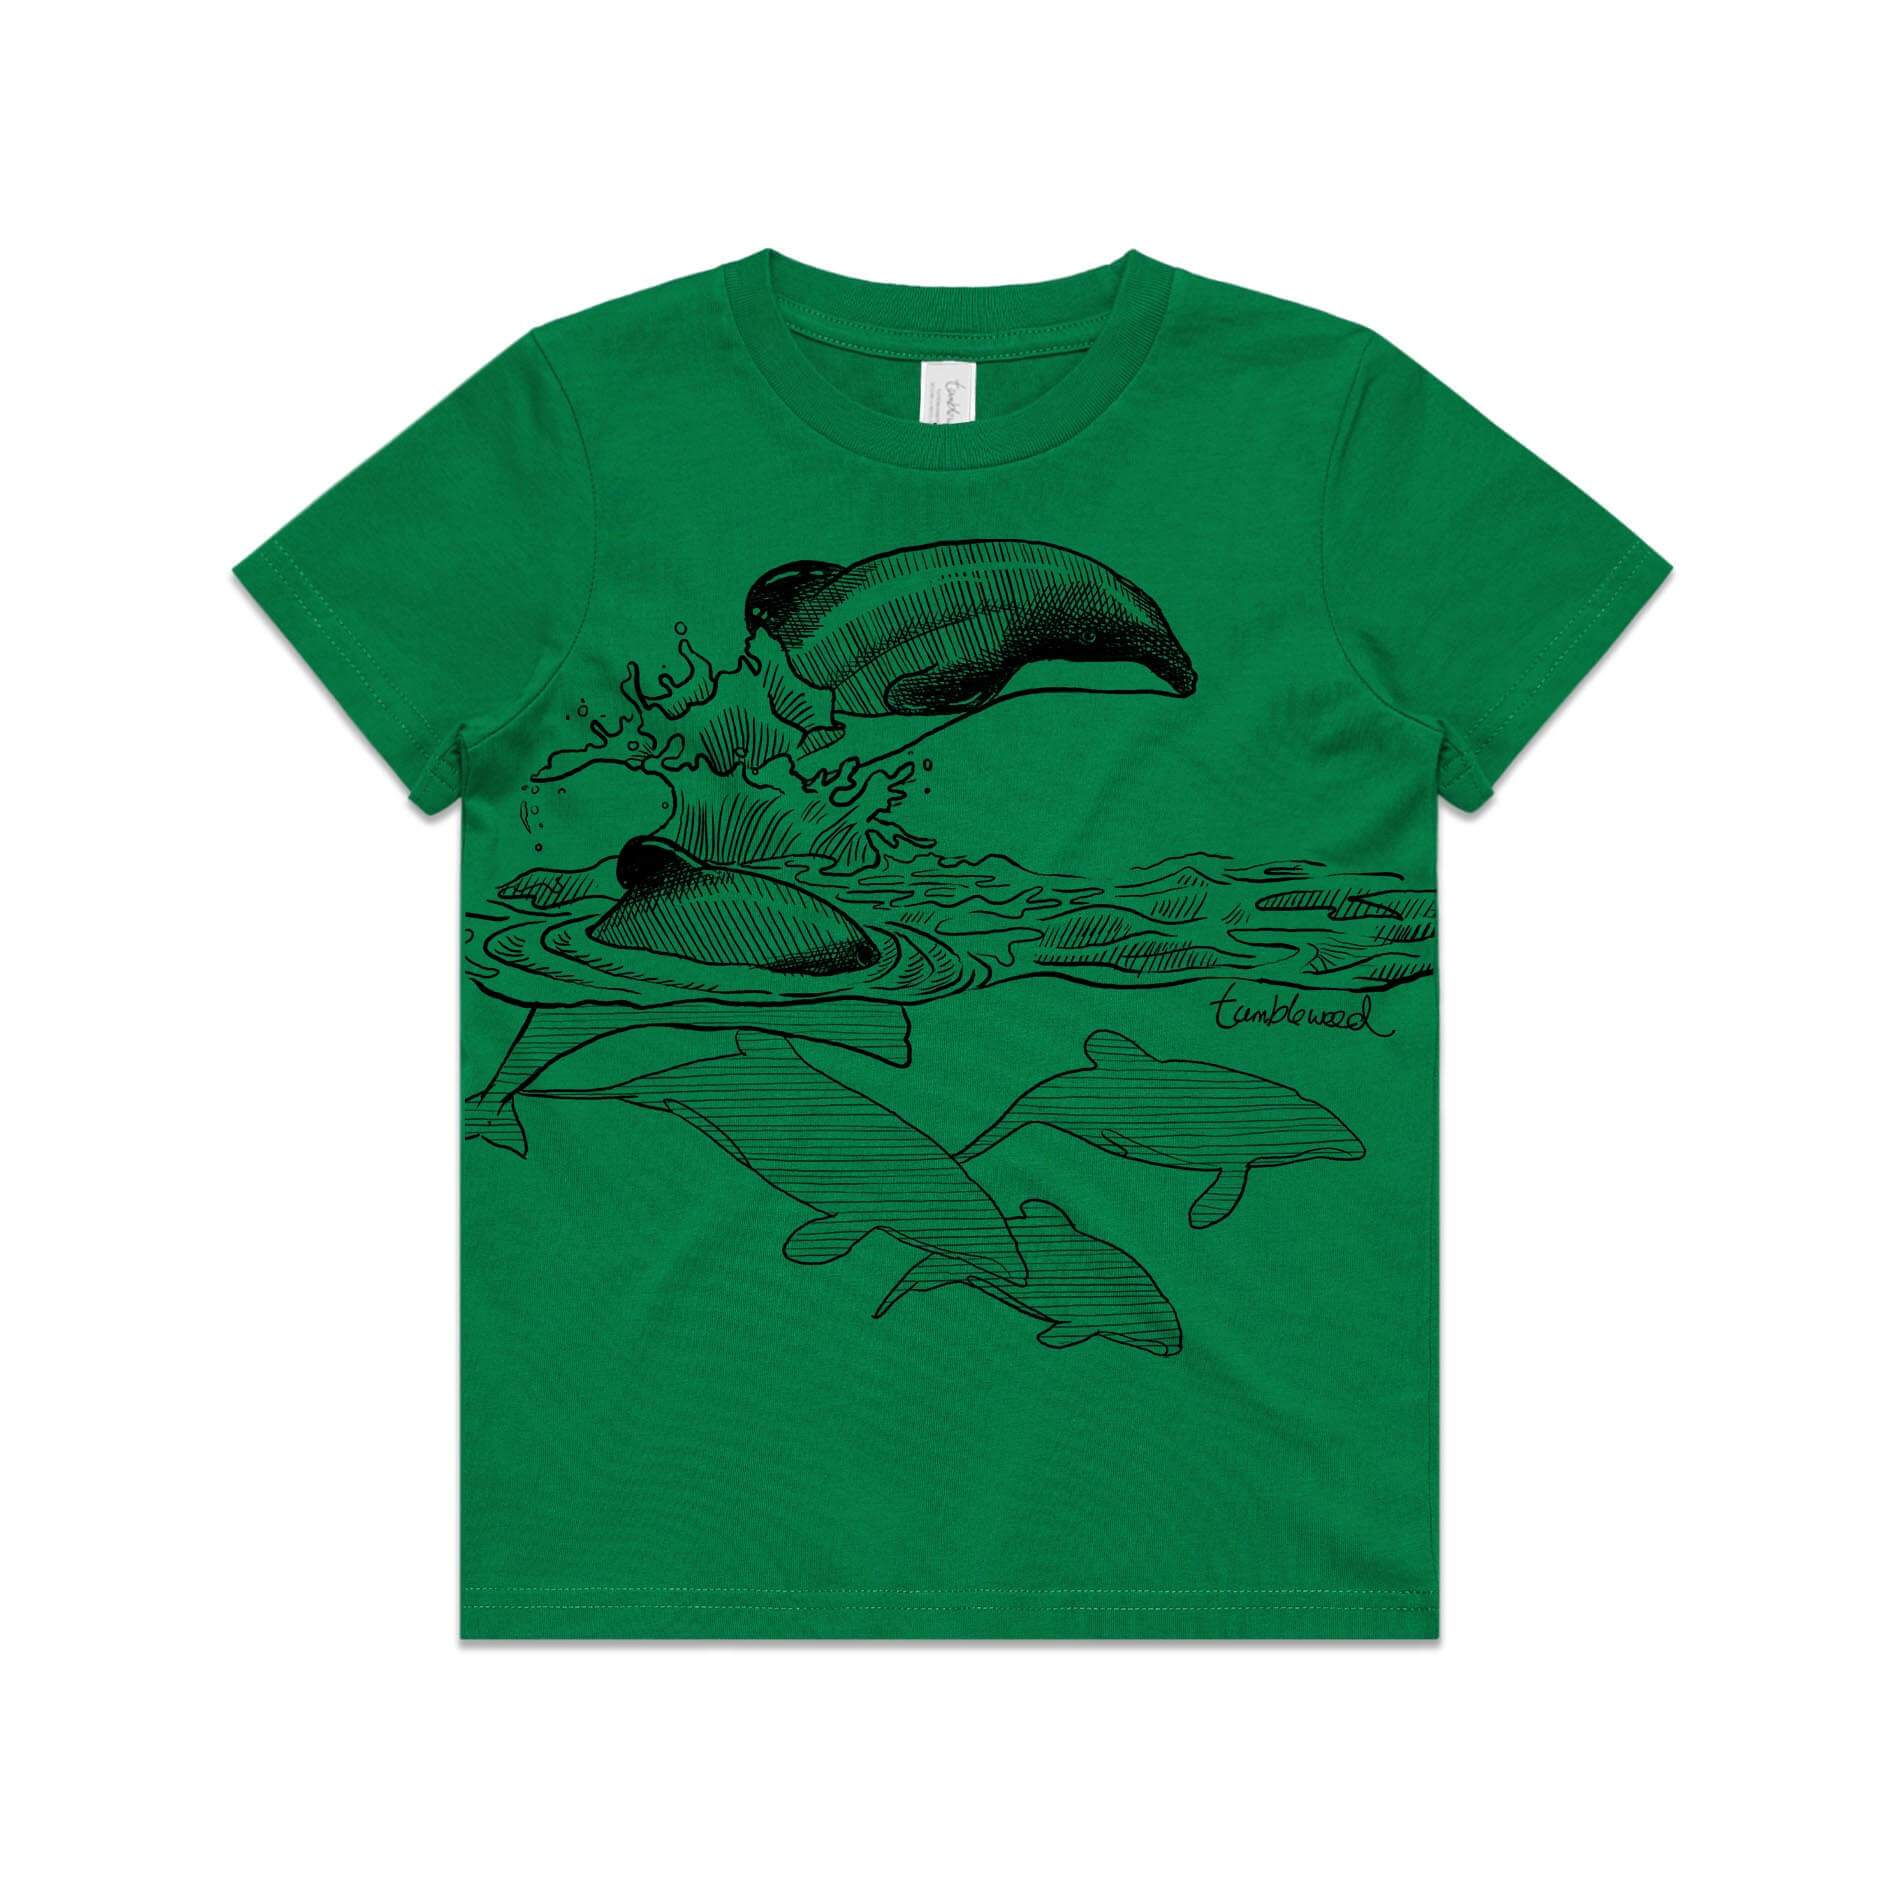 Green, cotton kids' t-shirt with screen printed ducks maui dolphin design.